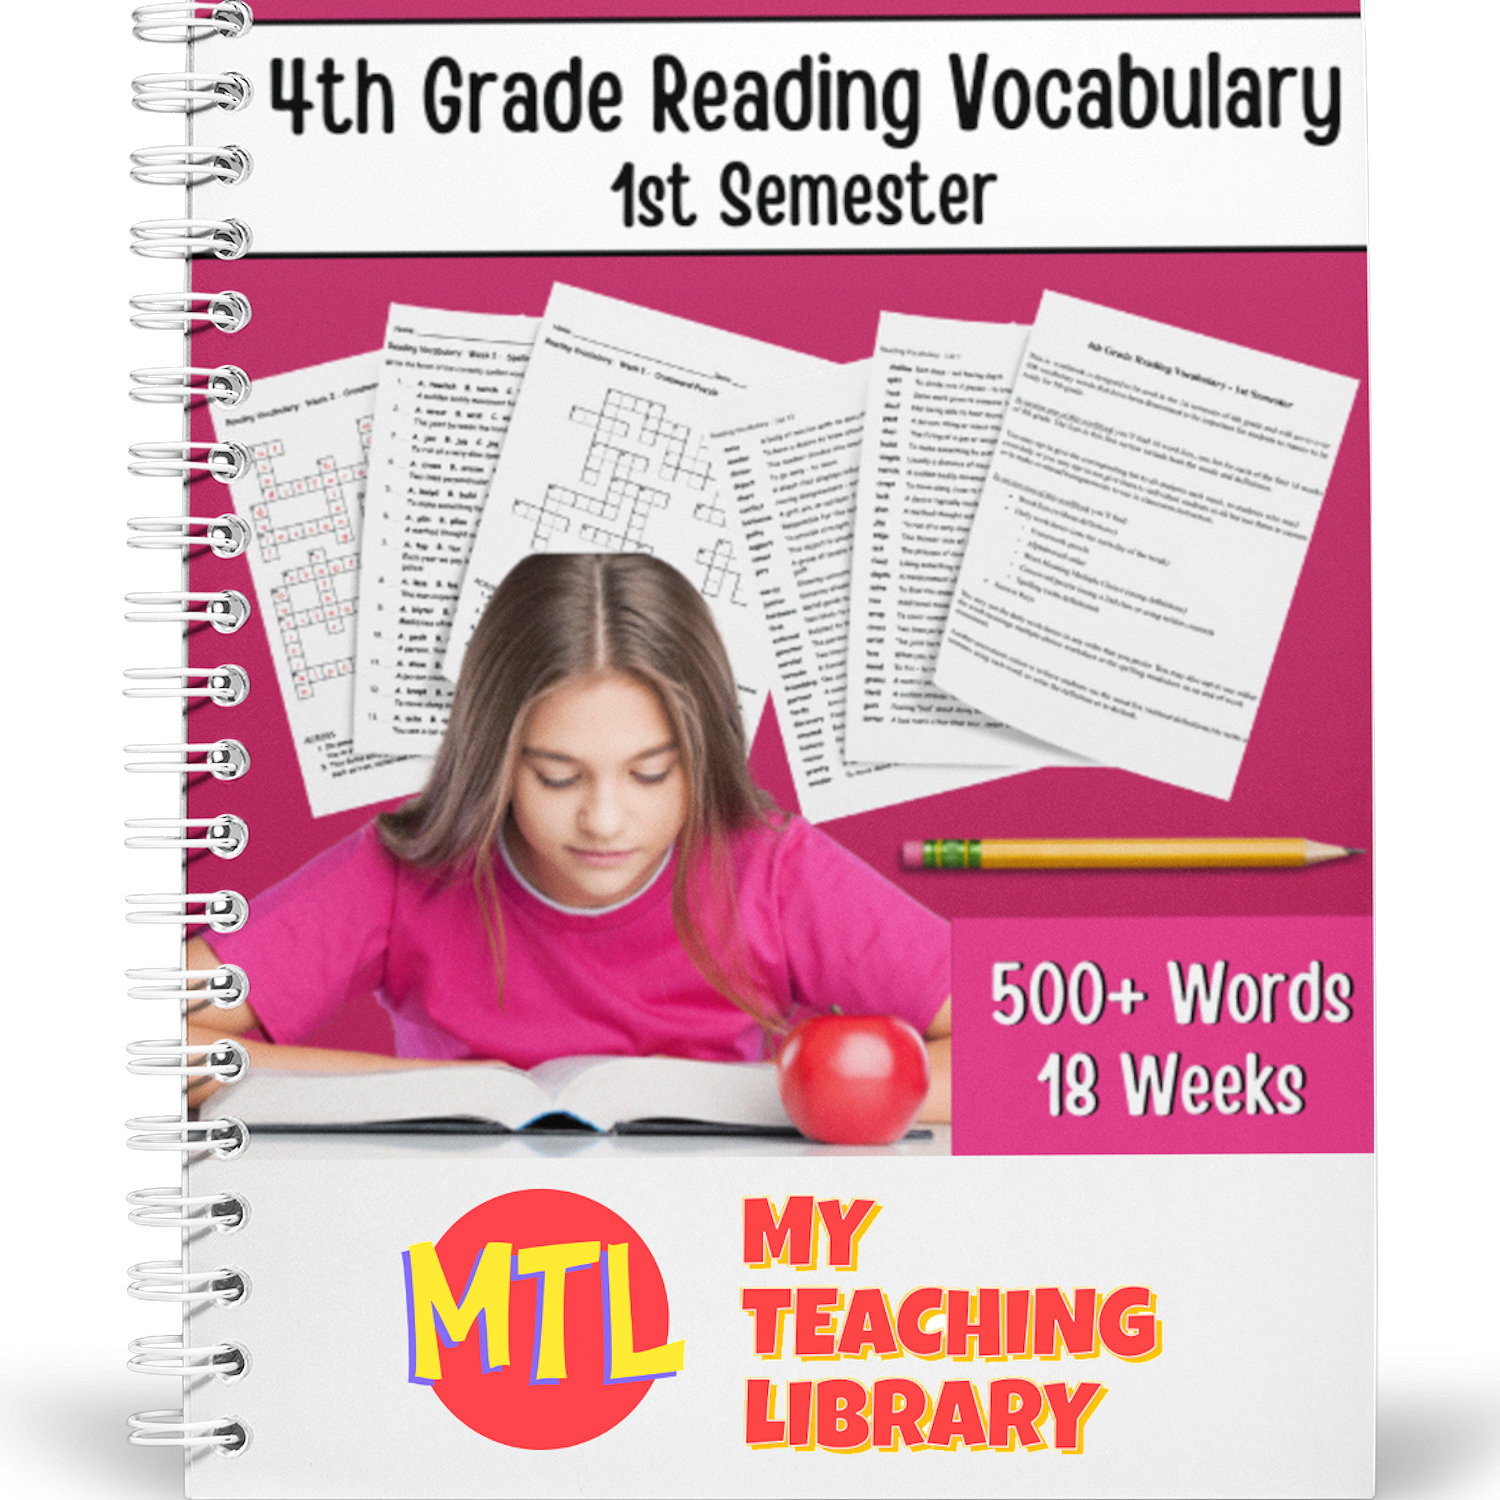 4th Grade Reading Vocabulary cover